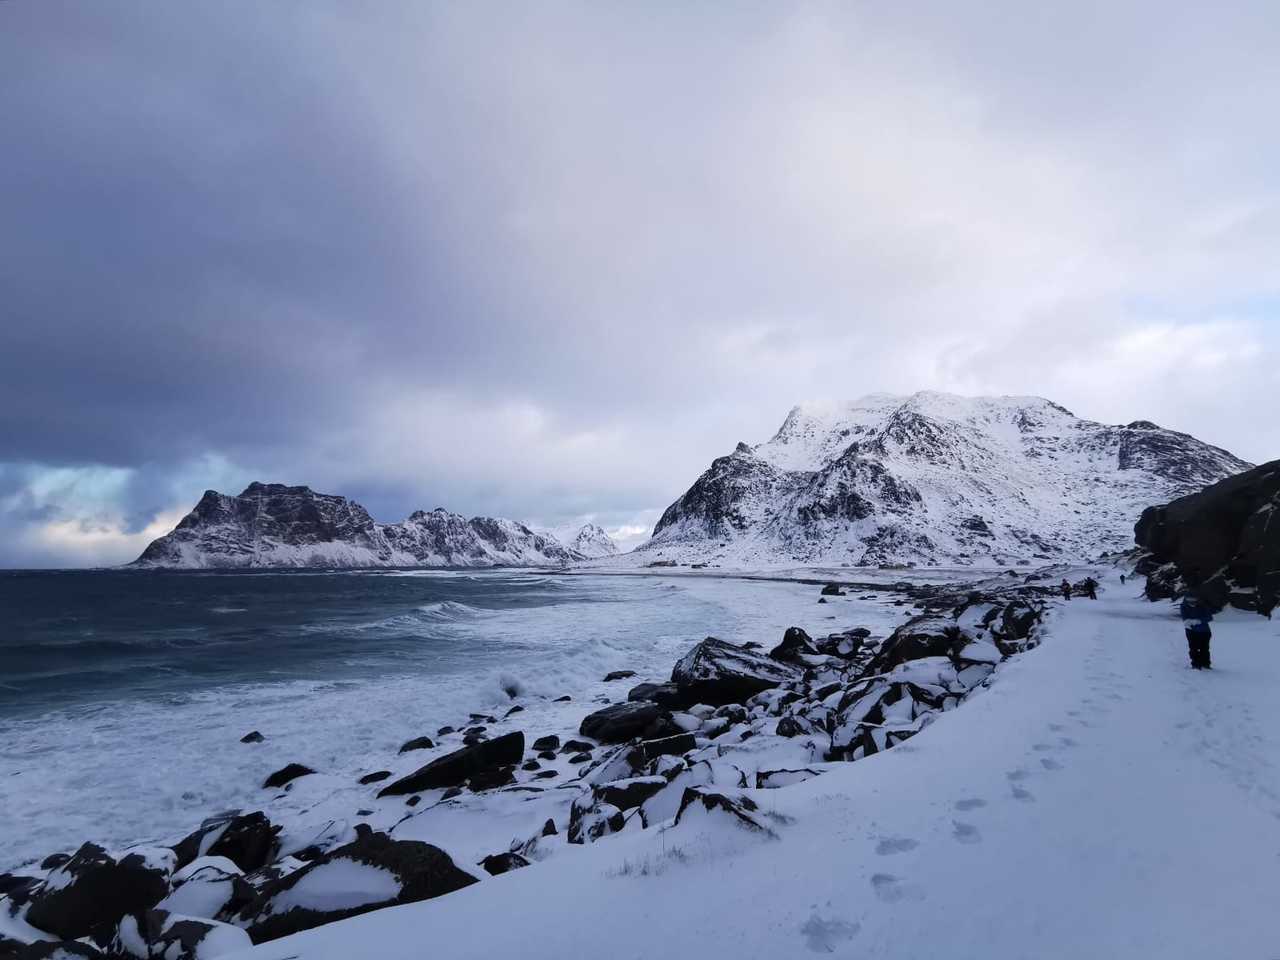 au-pied-du-fjord-enneige-en-norvege-cyril-valois